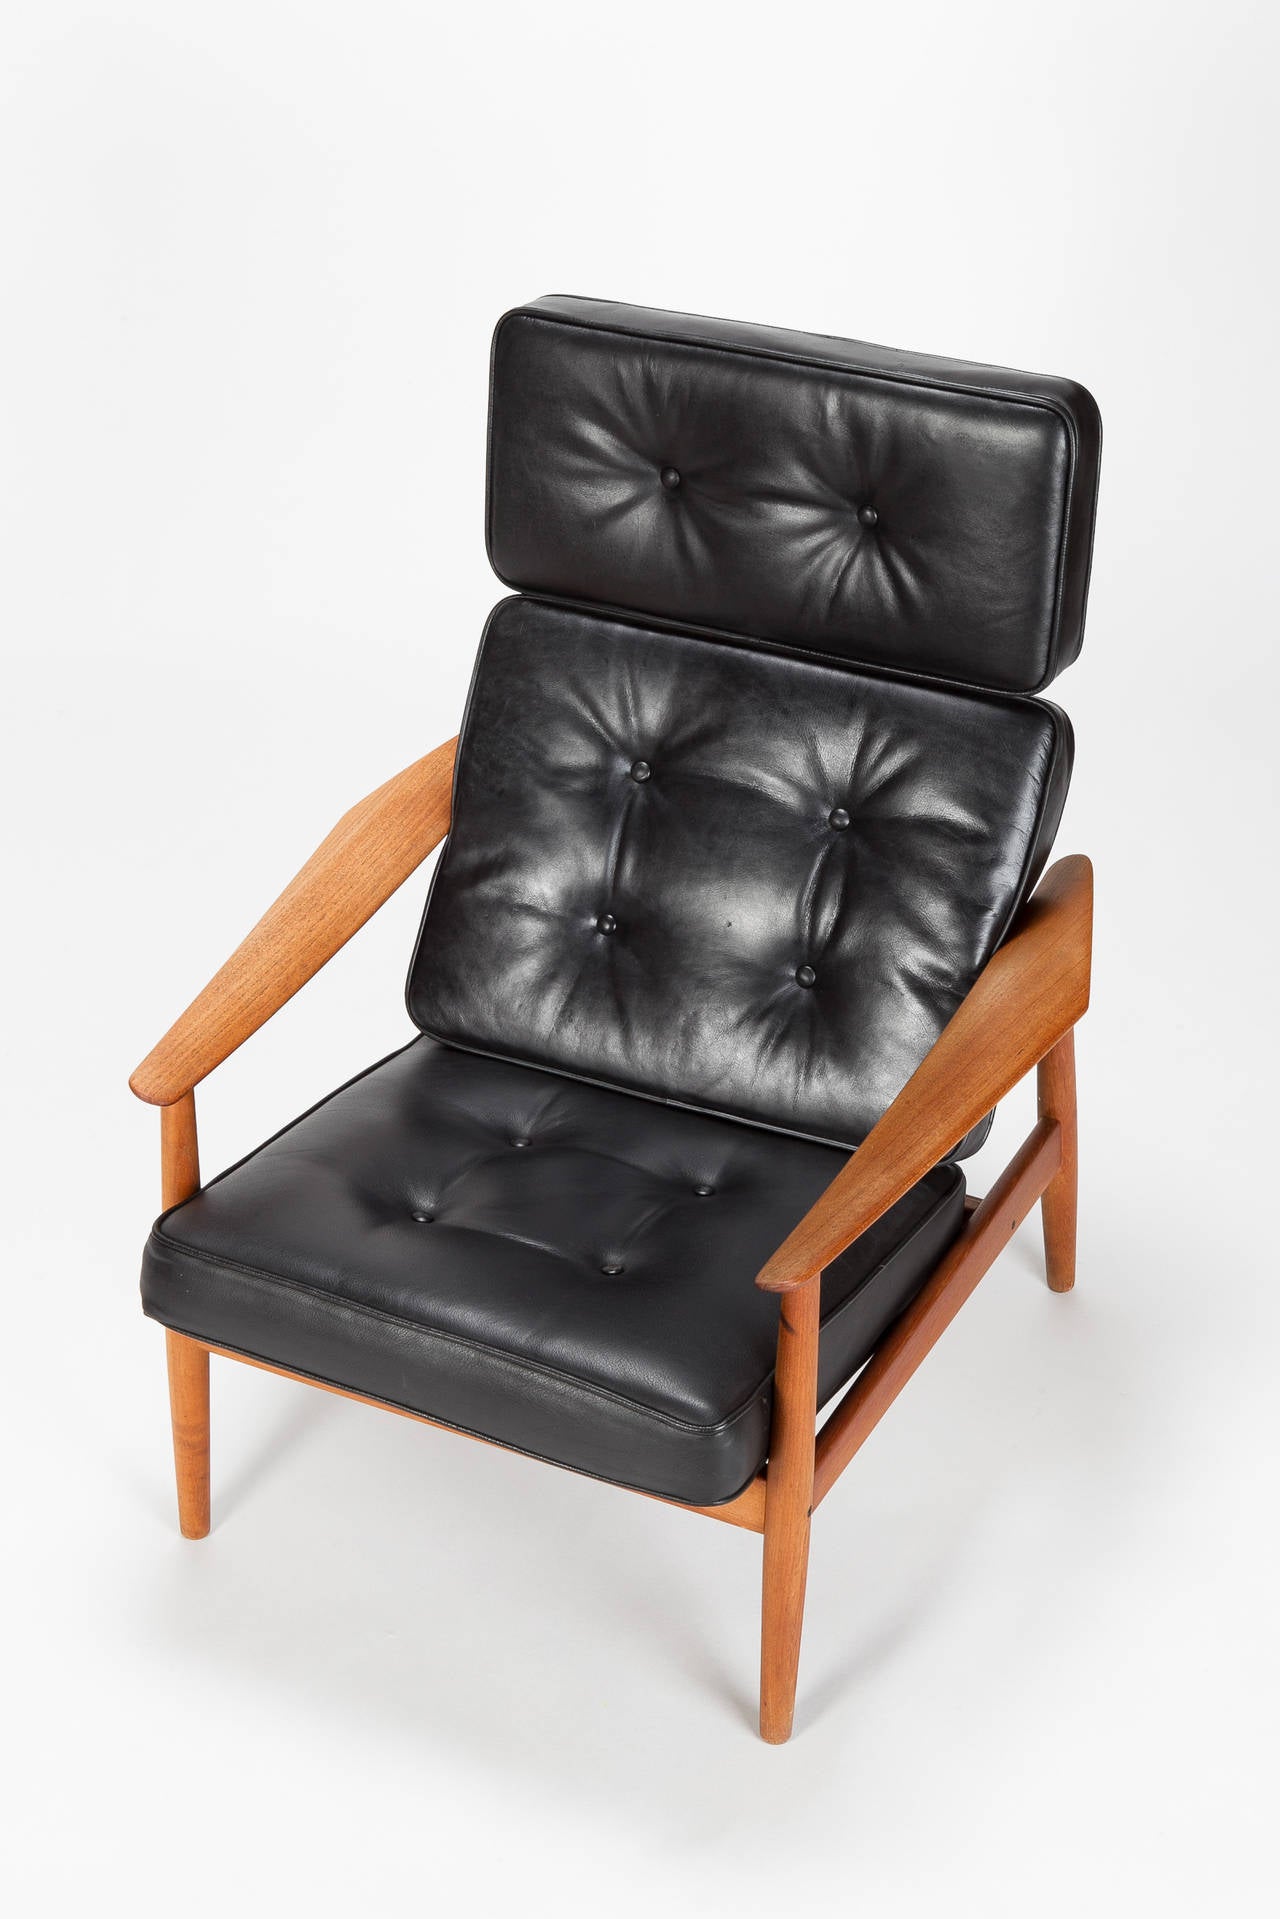 Leather Danish Teak Reclining Chair & Ottoman by Arne Vodder 1960s